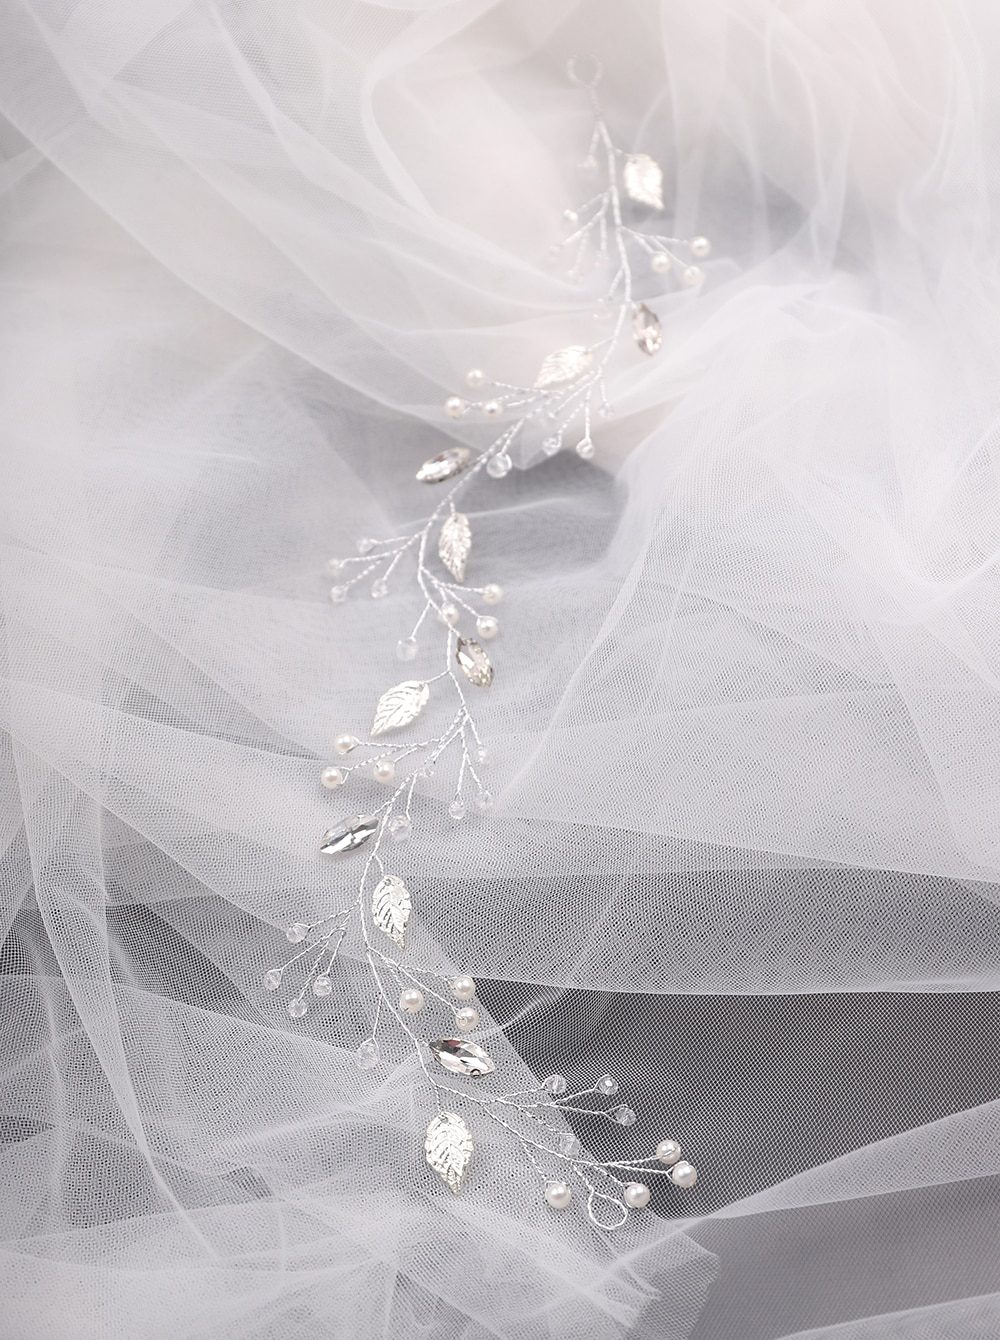 Rhinestones Retro Leaves Hair Accessories Wedding Bridal Hair Jewelry Crystal Pearls Hair Vine for Folwer Girl and Women